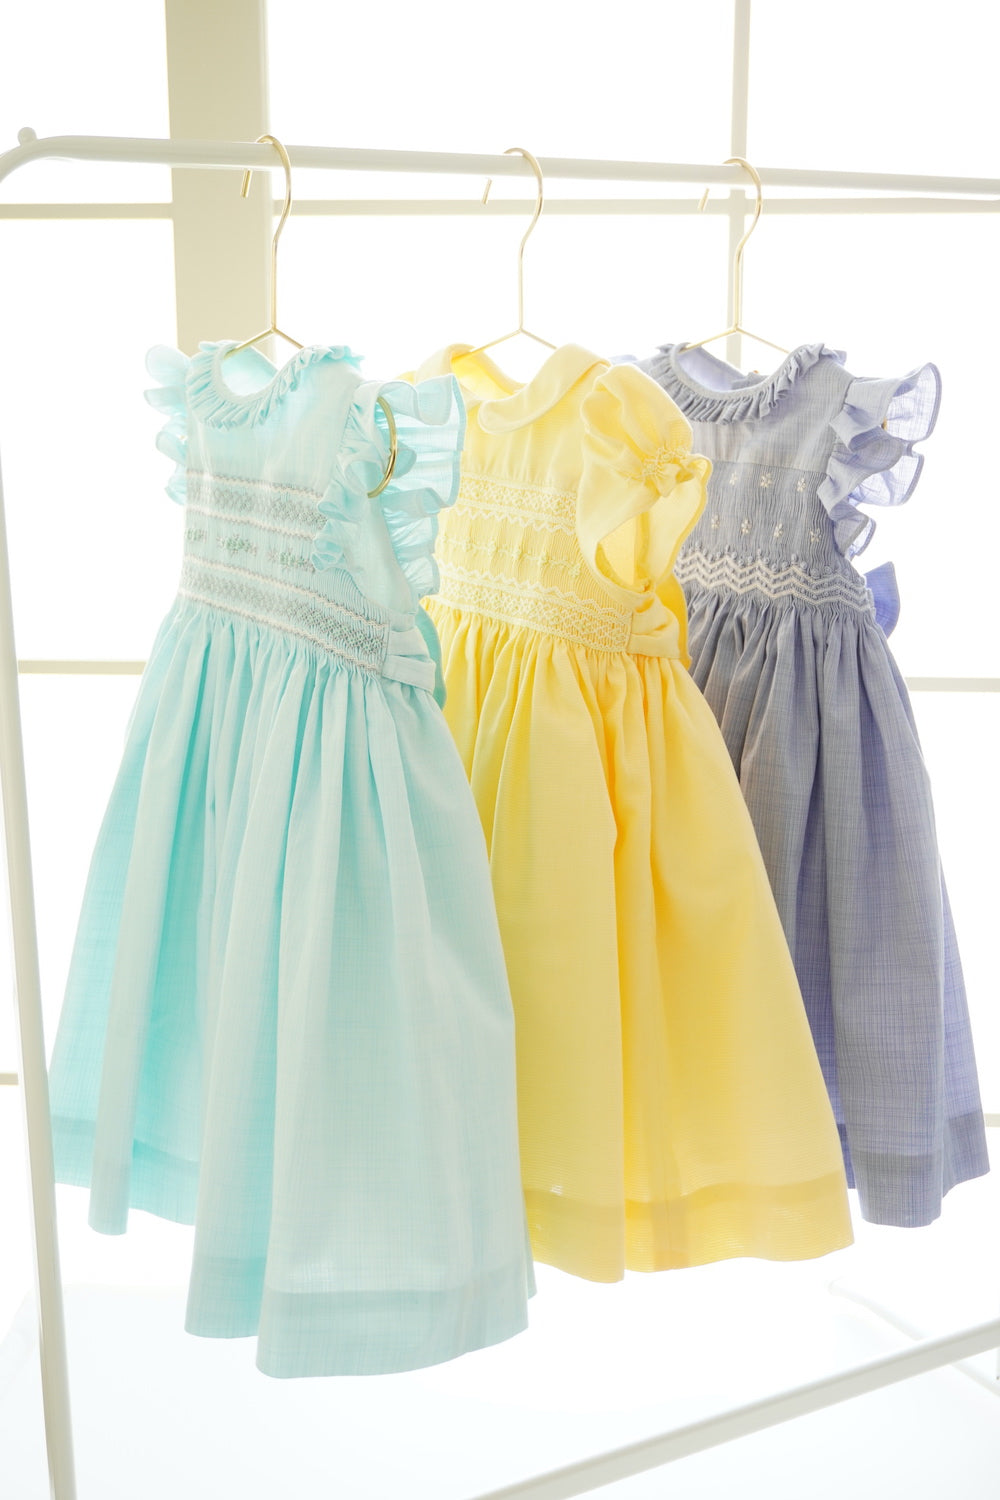 Charlotte sy Dimby San Sakae Petit European French style handmade smocked dresses for children babies and girls japan